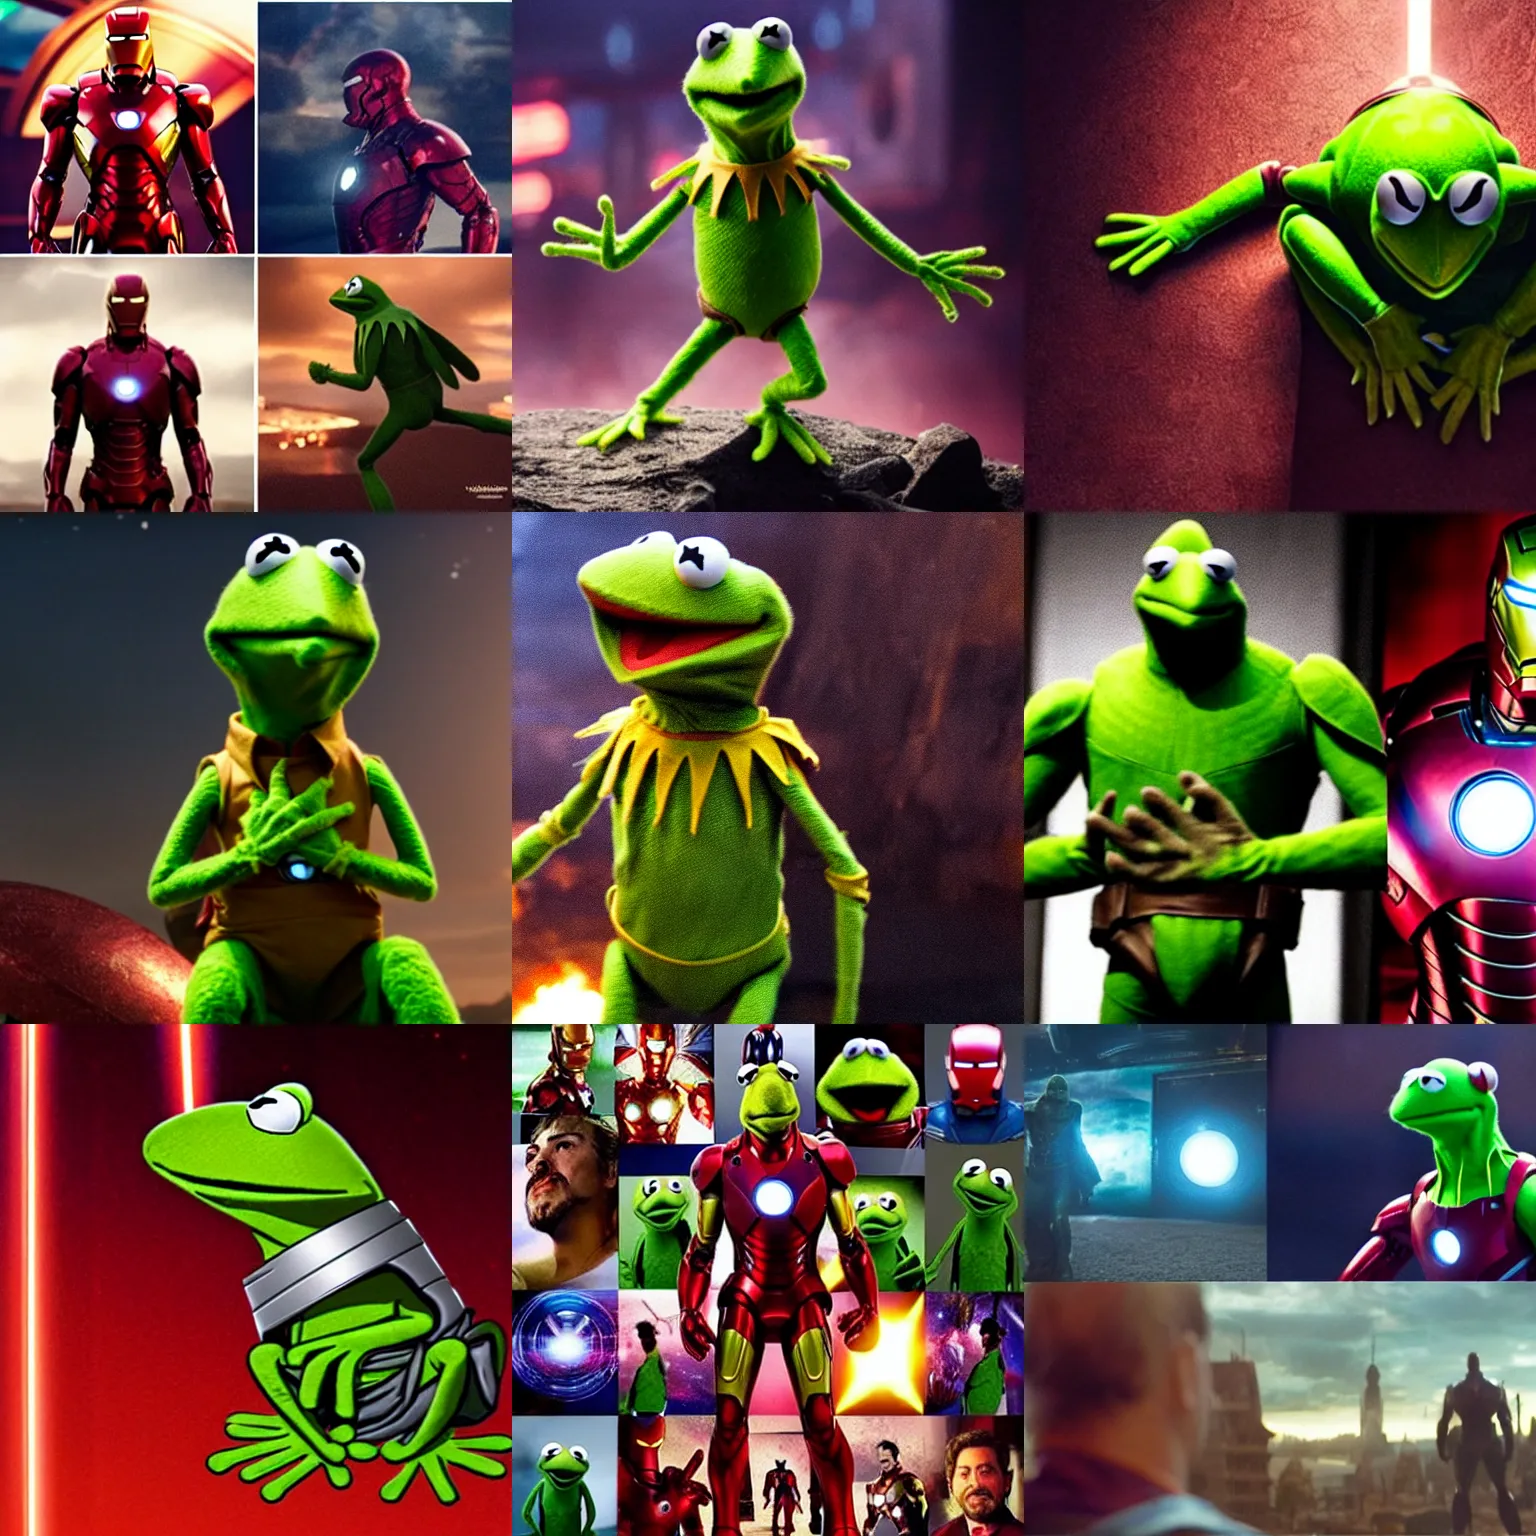 Prompt: kermit the frog as iron man, avengers endgame, landscape, infinity gauntlet, snap, dramatic lighting, film still